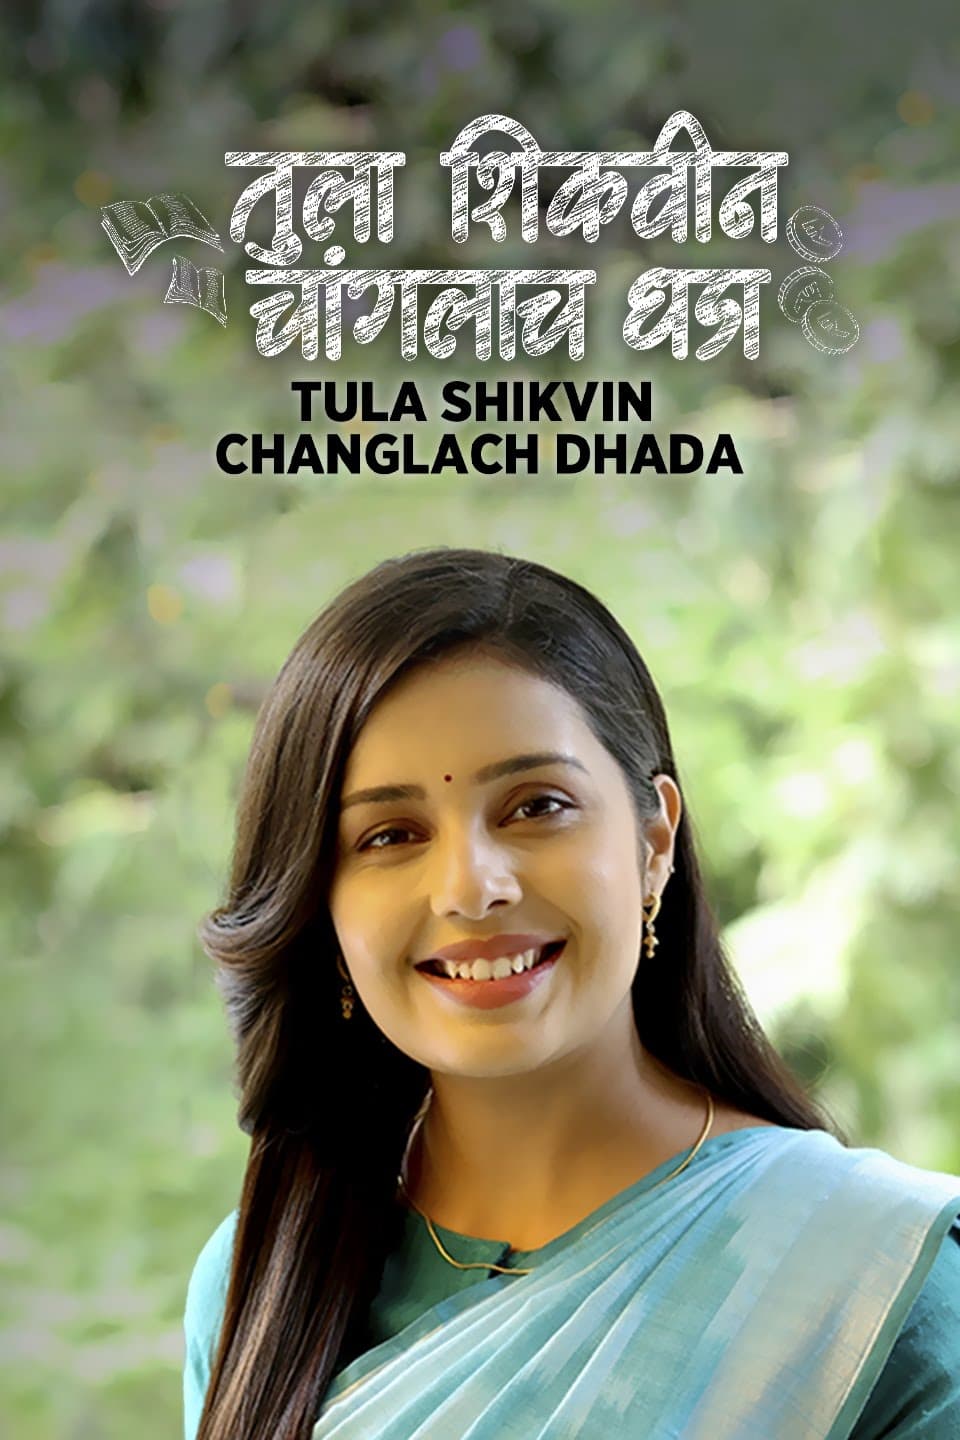 Tula Shikvin Changlach Dhada